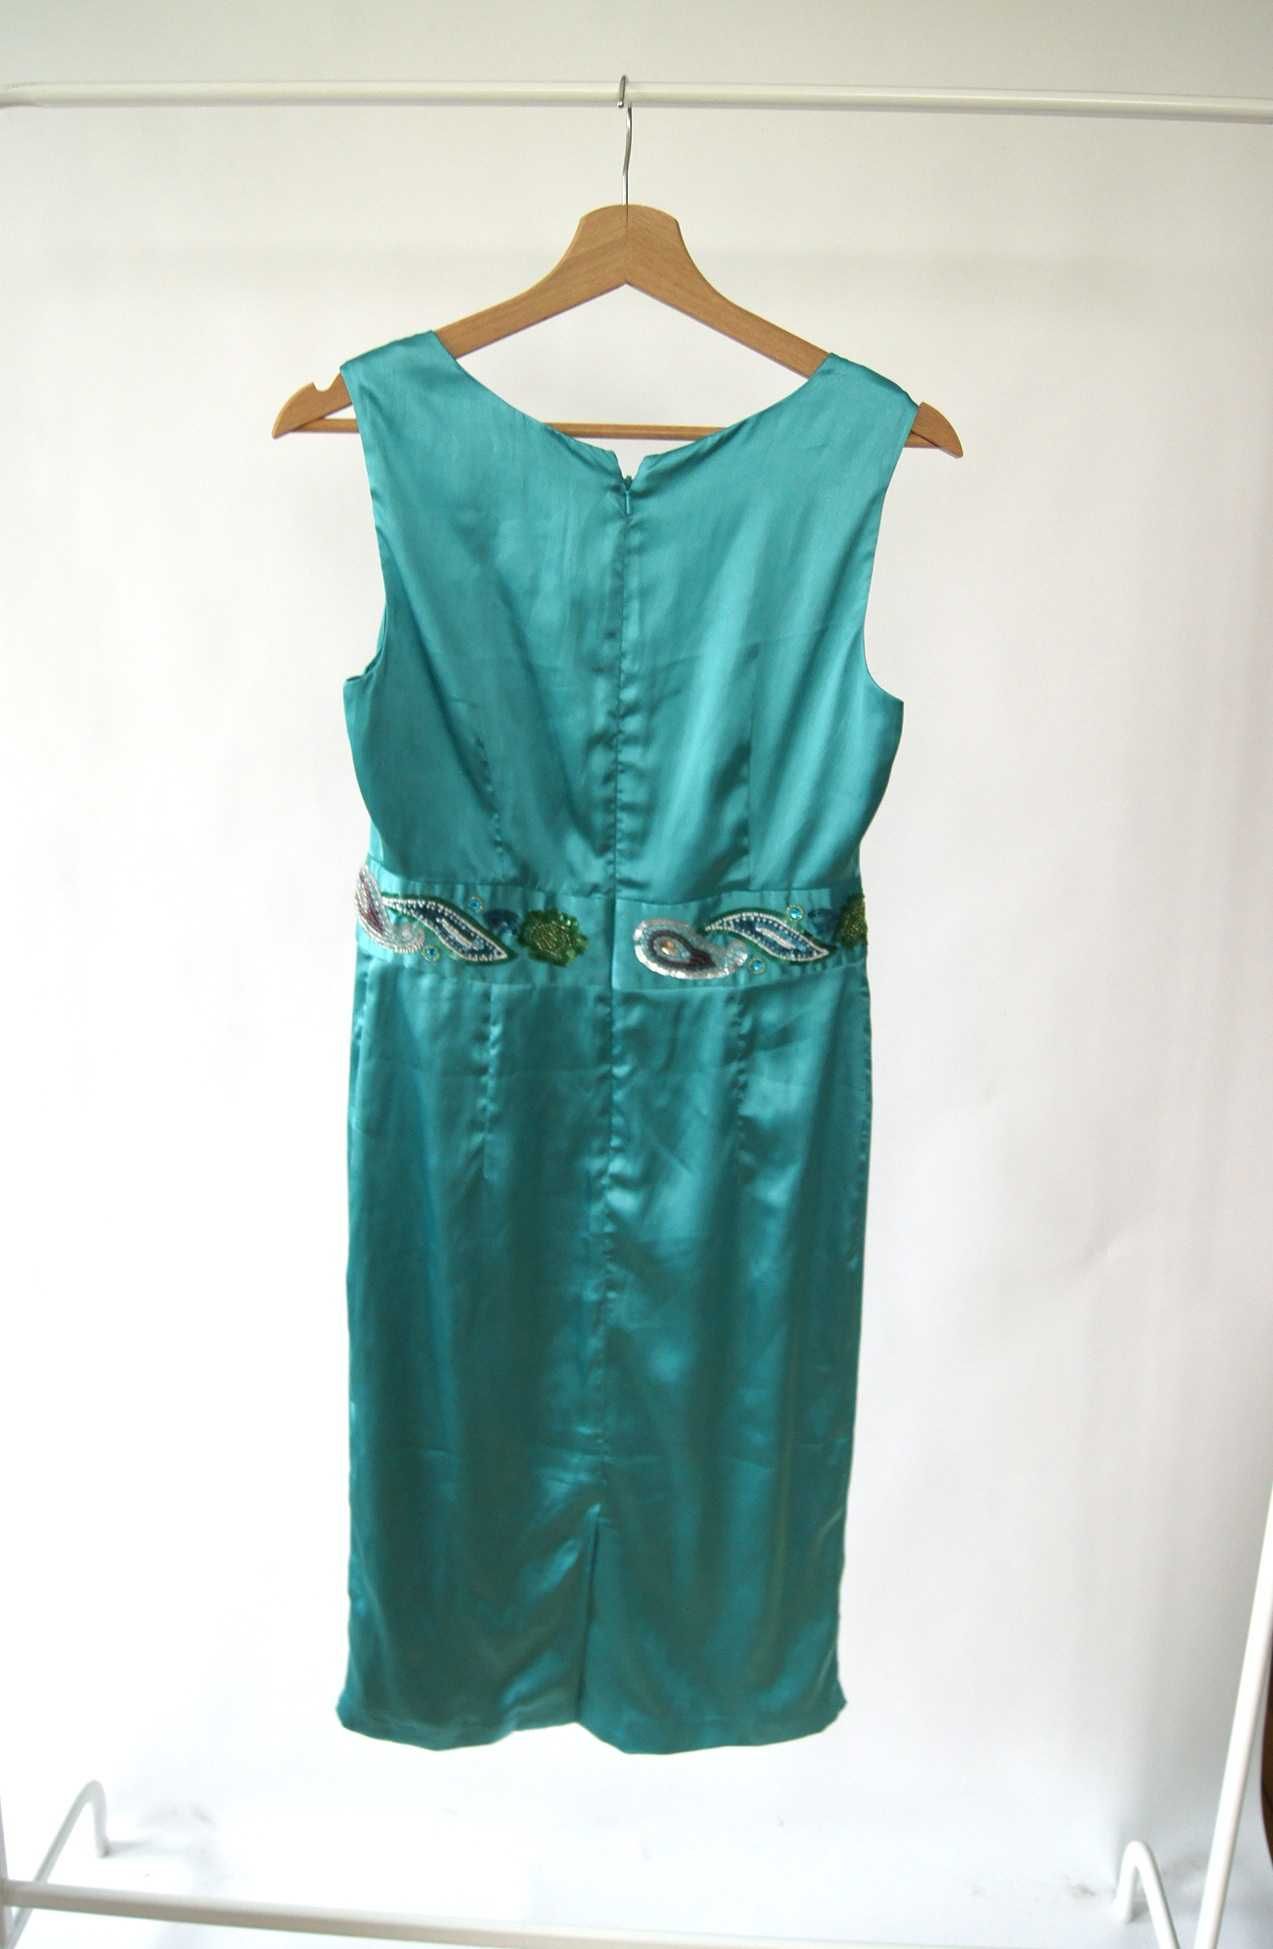 jasnozielona morska turkusowa śliska lśniąca sukienka prosta S M mięta